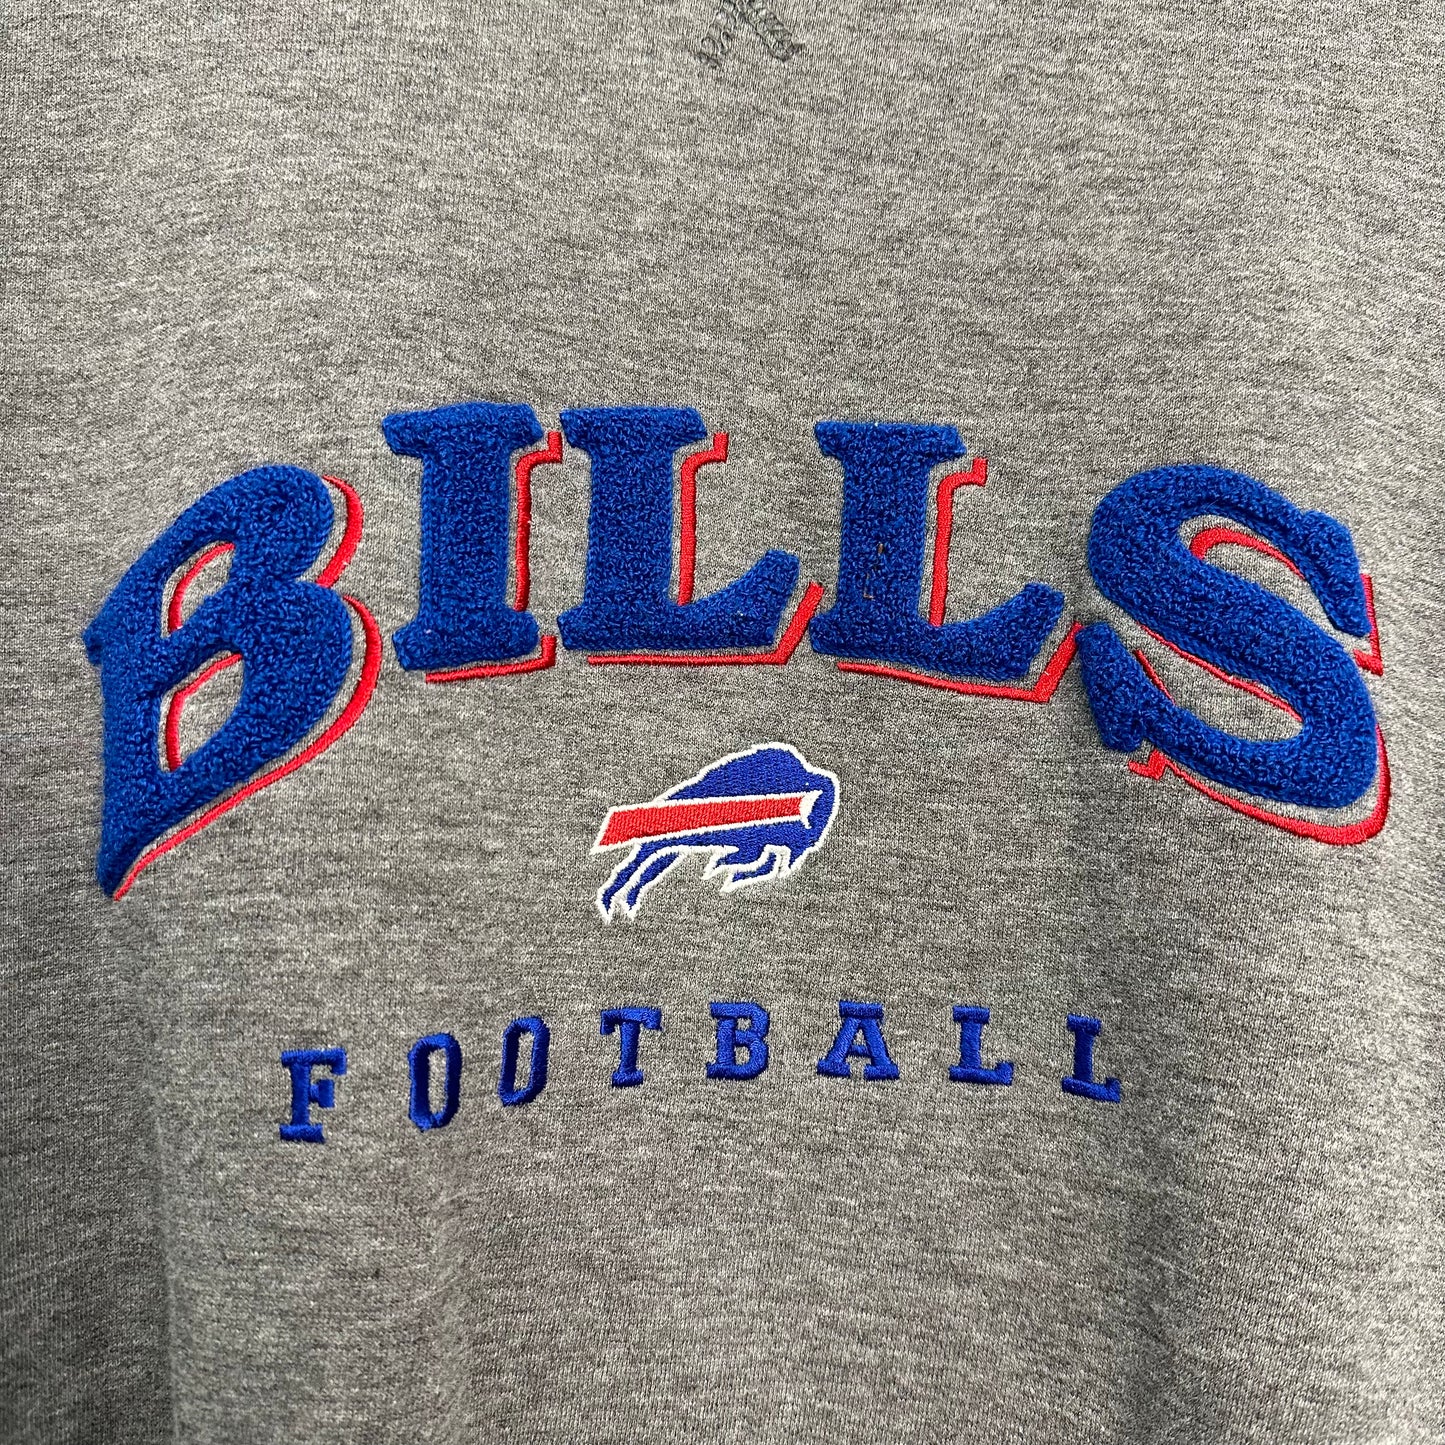 Buffalo Bills Puma Sweatshirt - XL